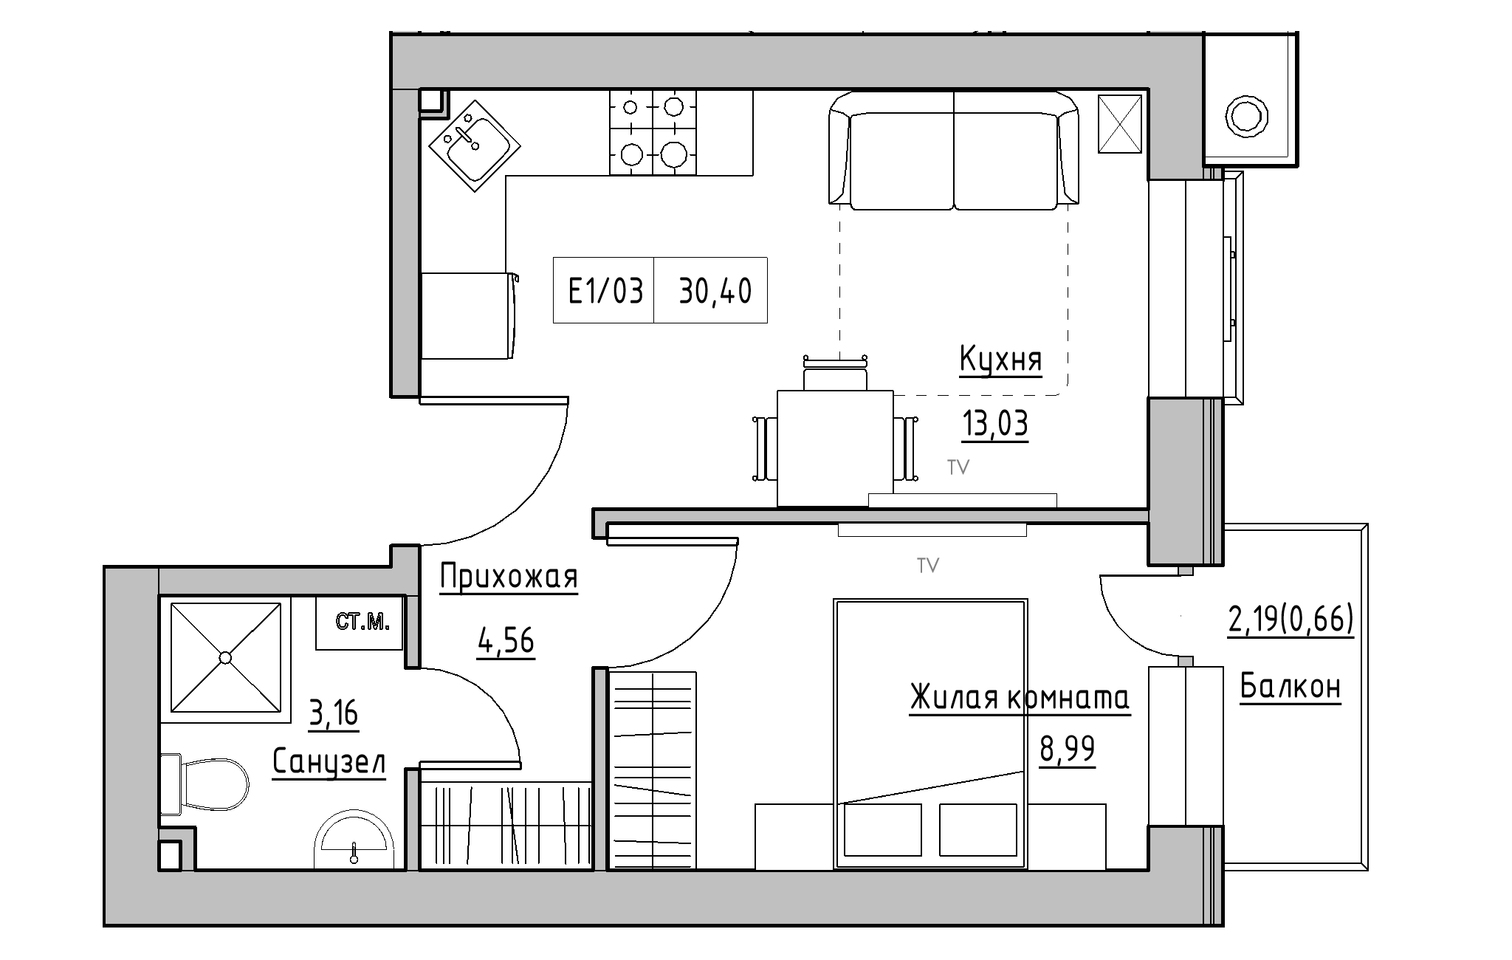 Planning 1-rm flats area 30.4m2, KS-013-02/0002.